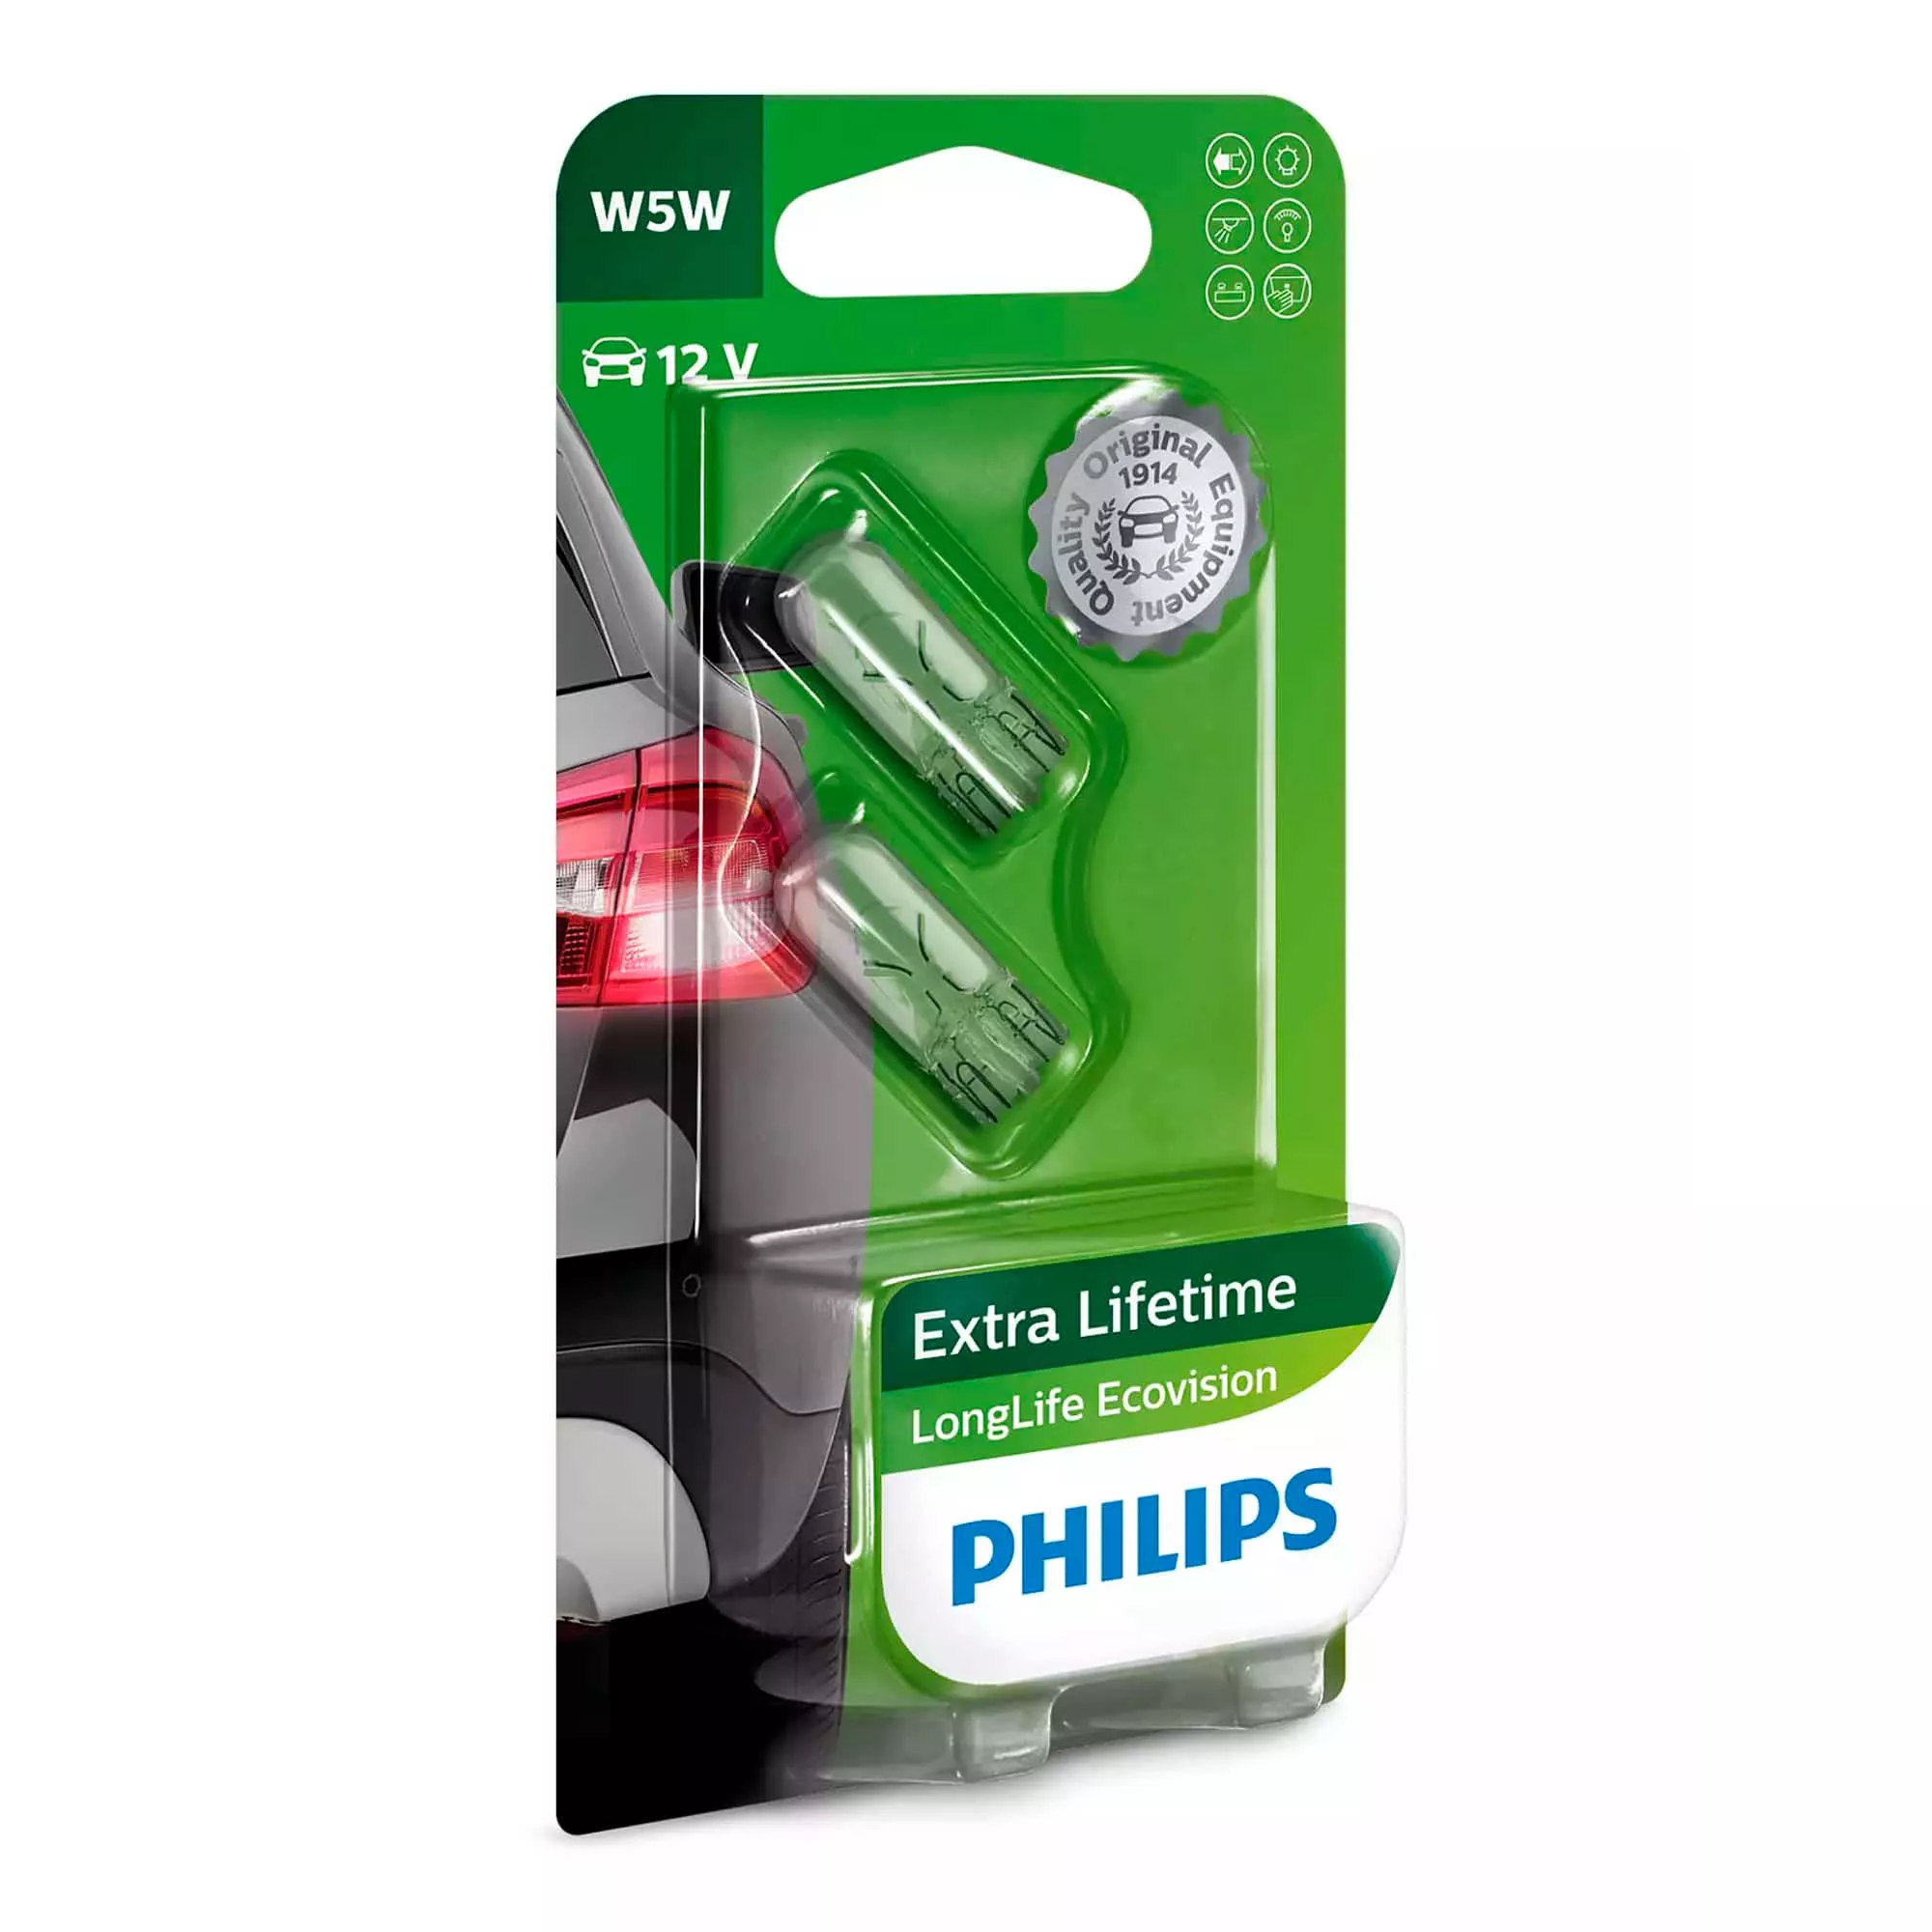 Лампа Philips LongLife EcoVision W5W 12V 5W 38204430